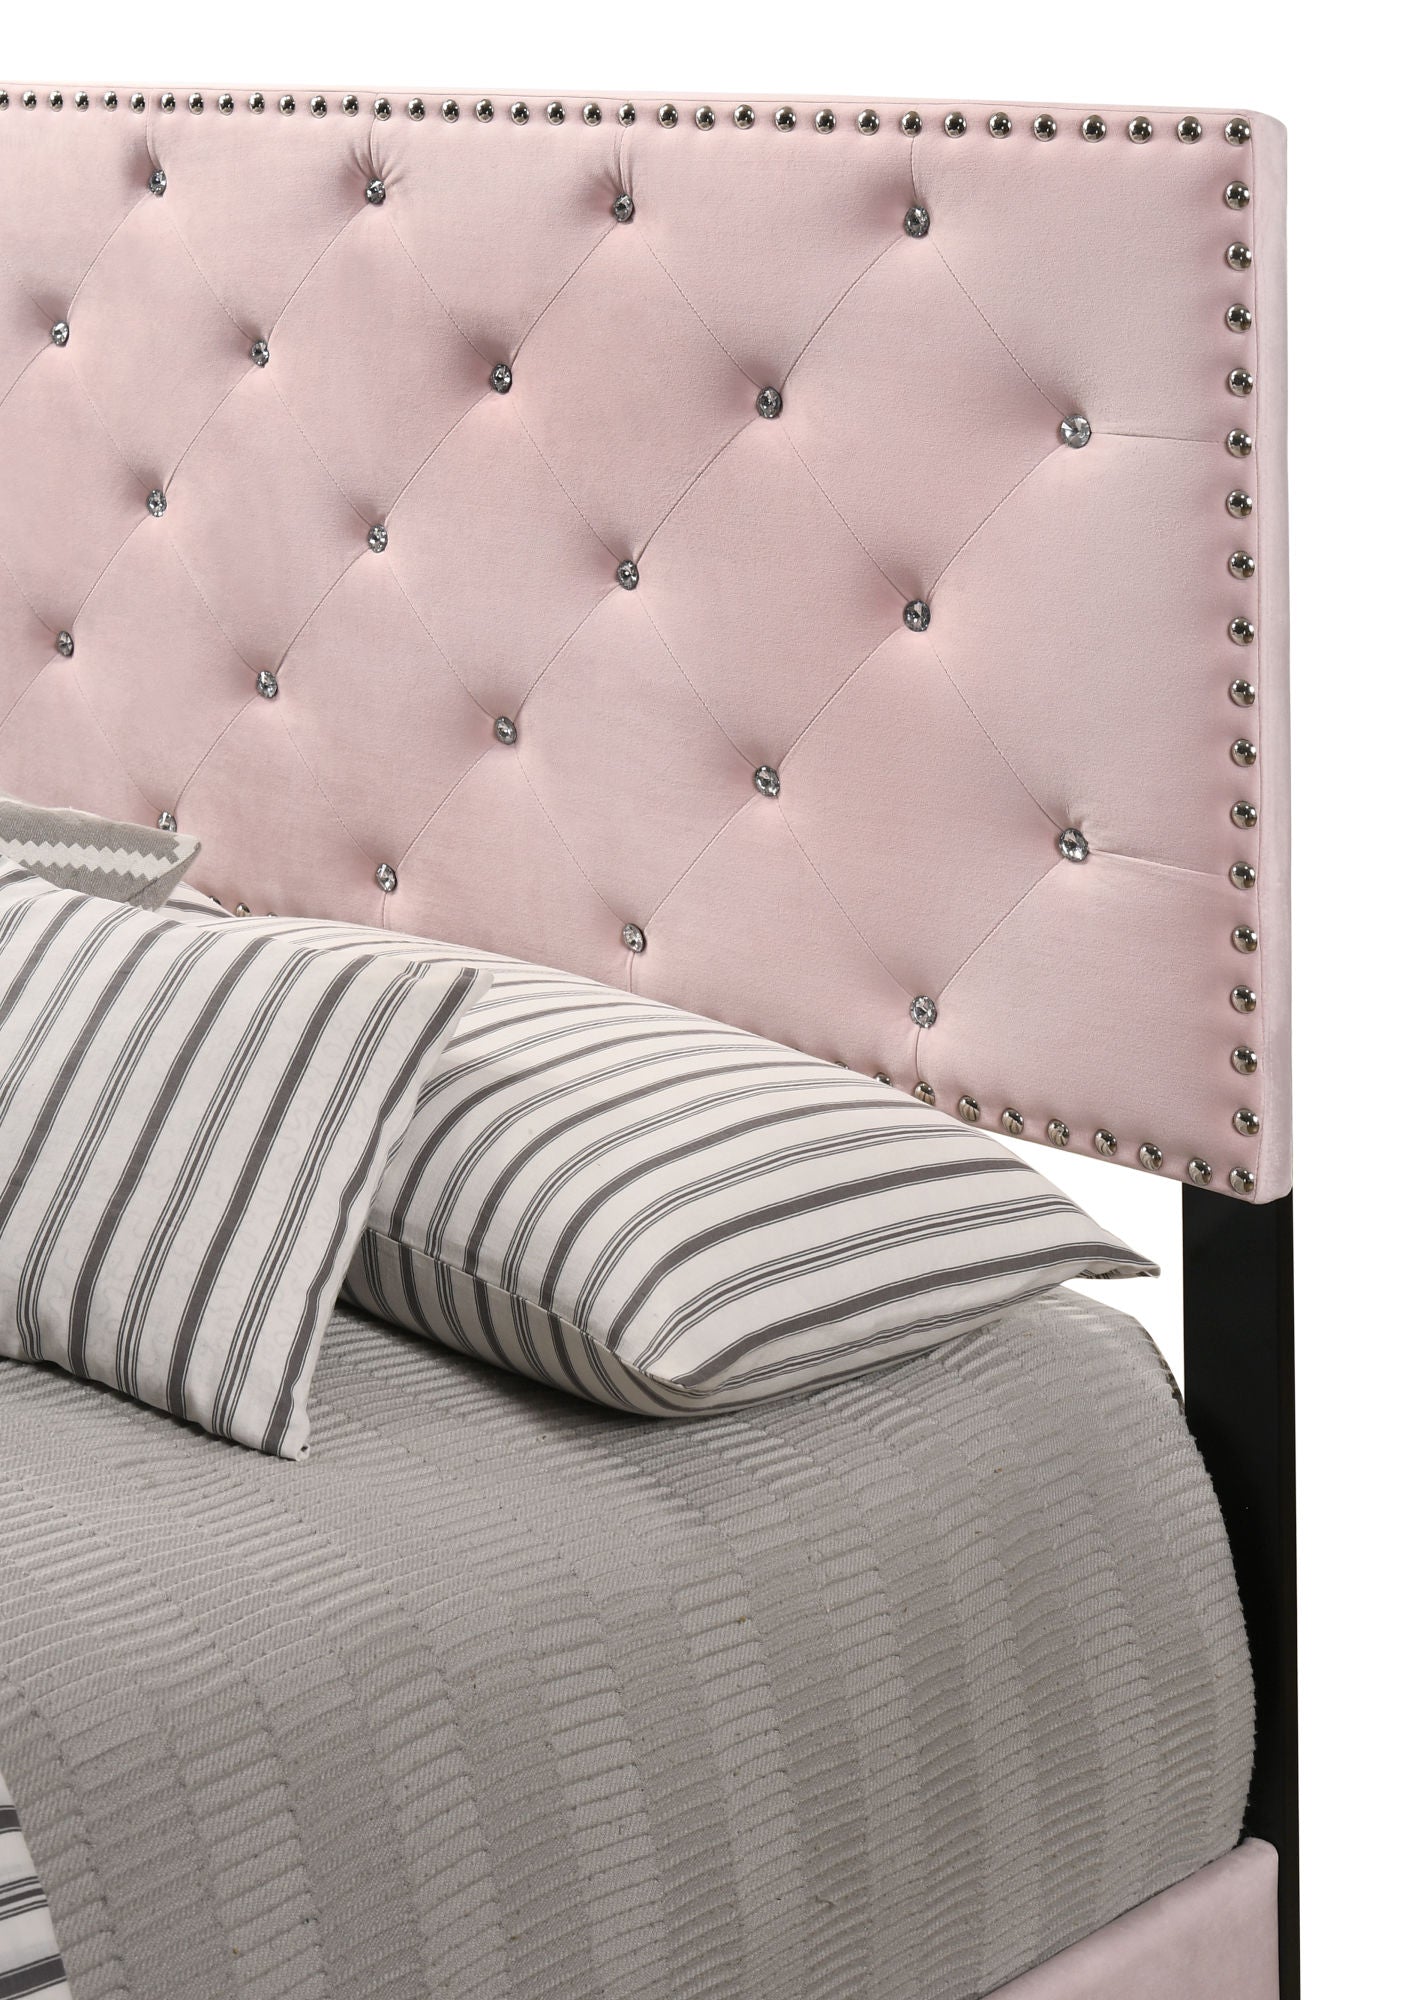 velvet suffolk upholstered bed, pink